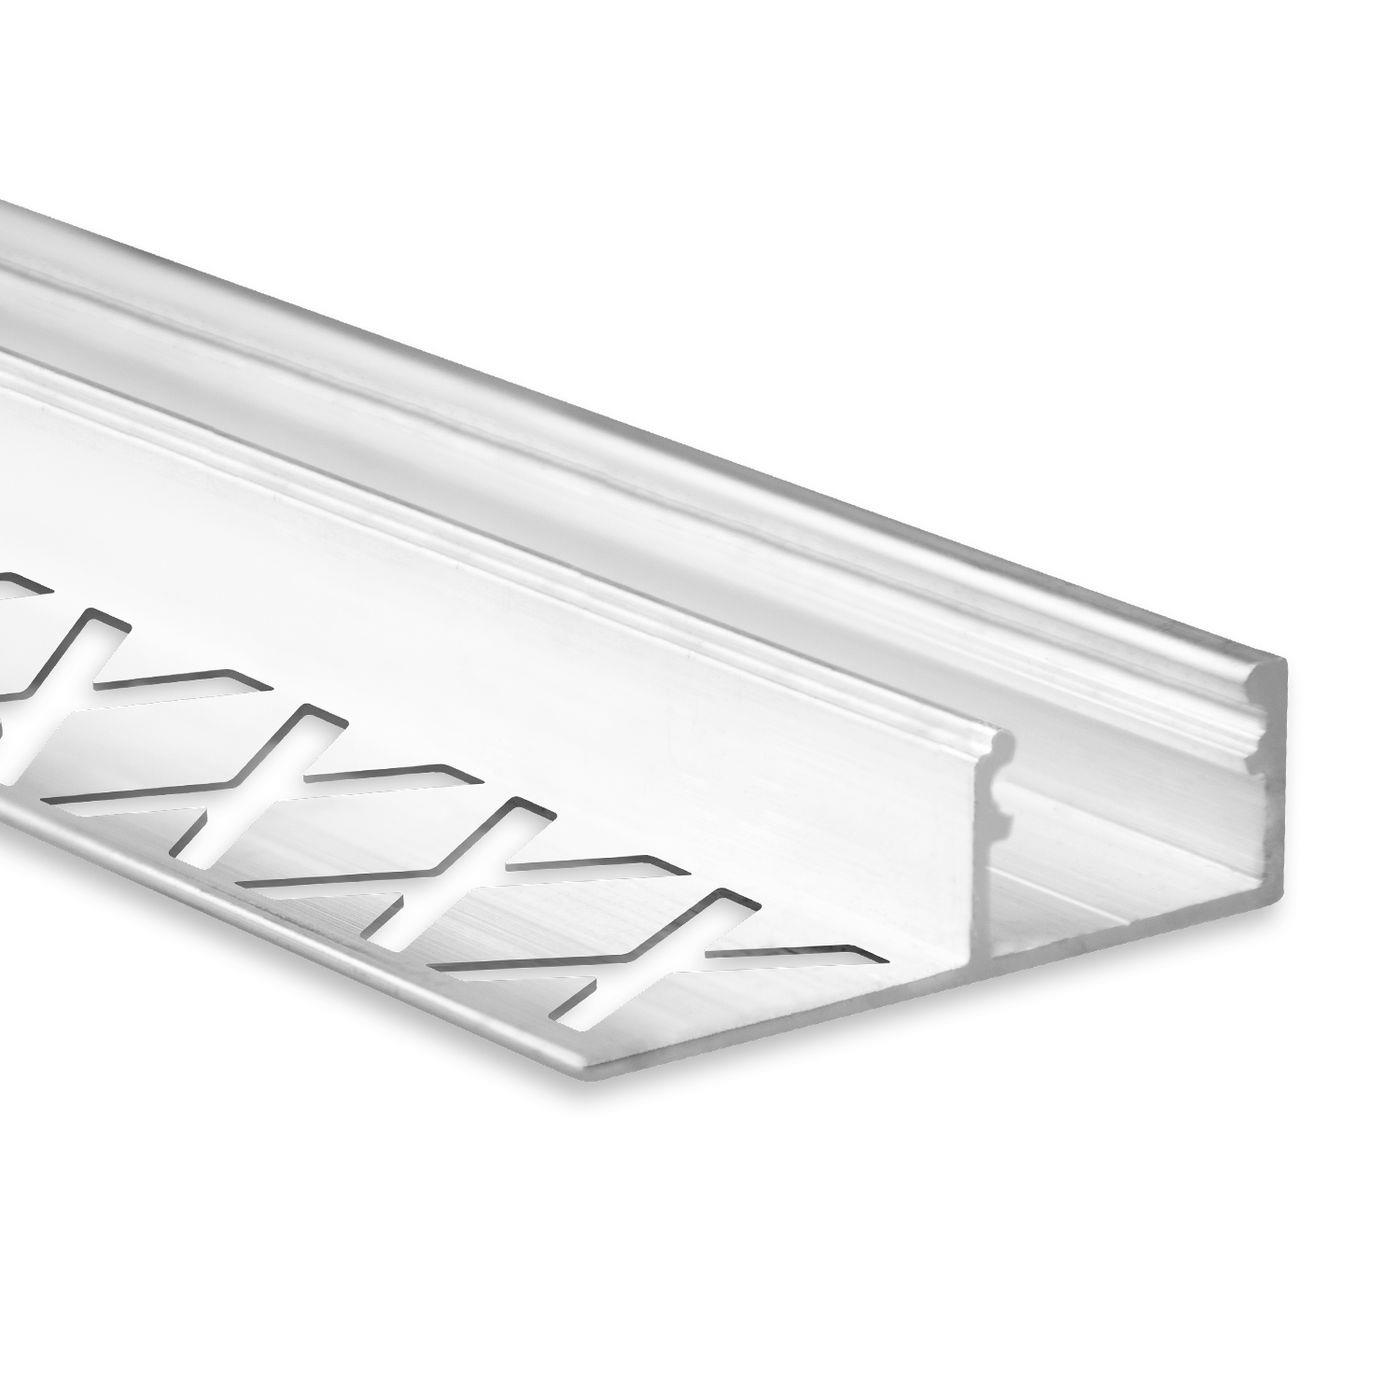 2m LED profile FP2 Silver 37x11mm Aluminium Tile profile for 14mm LED strips